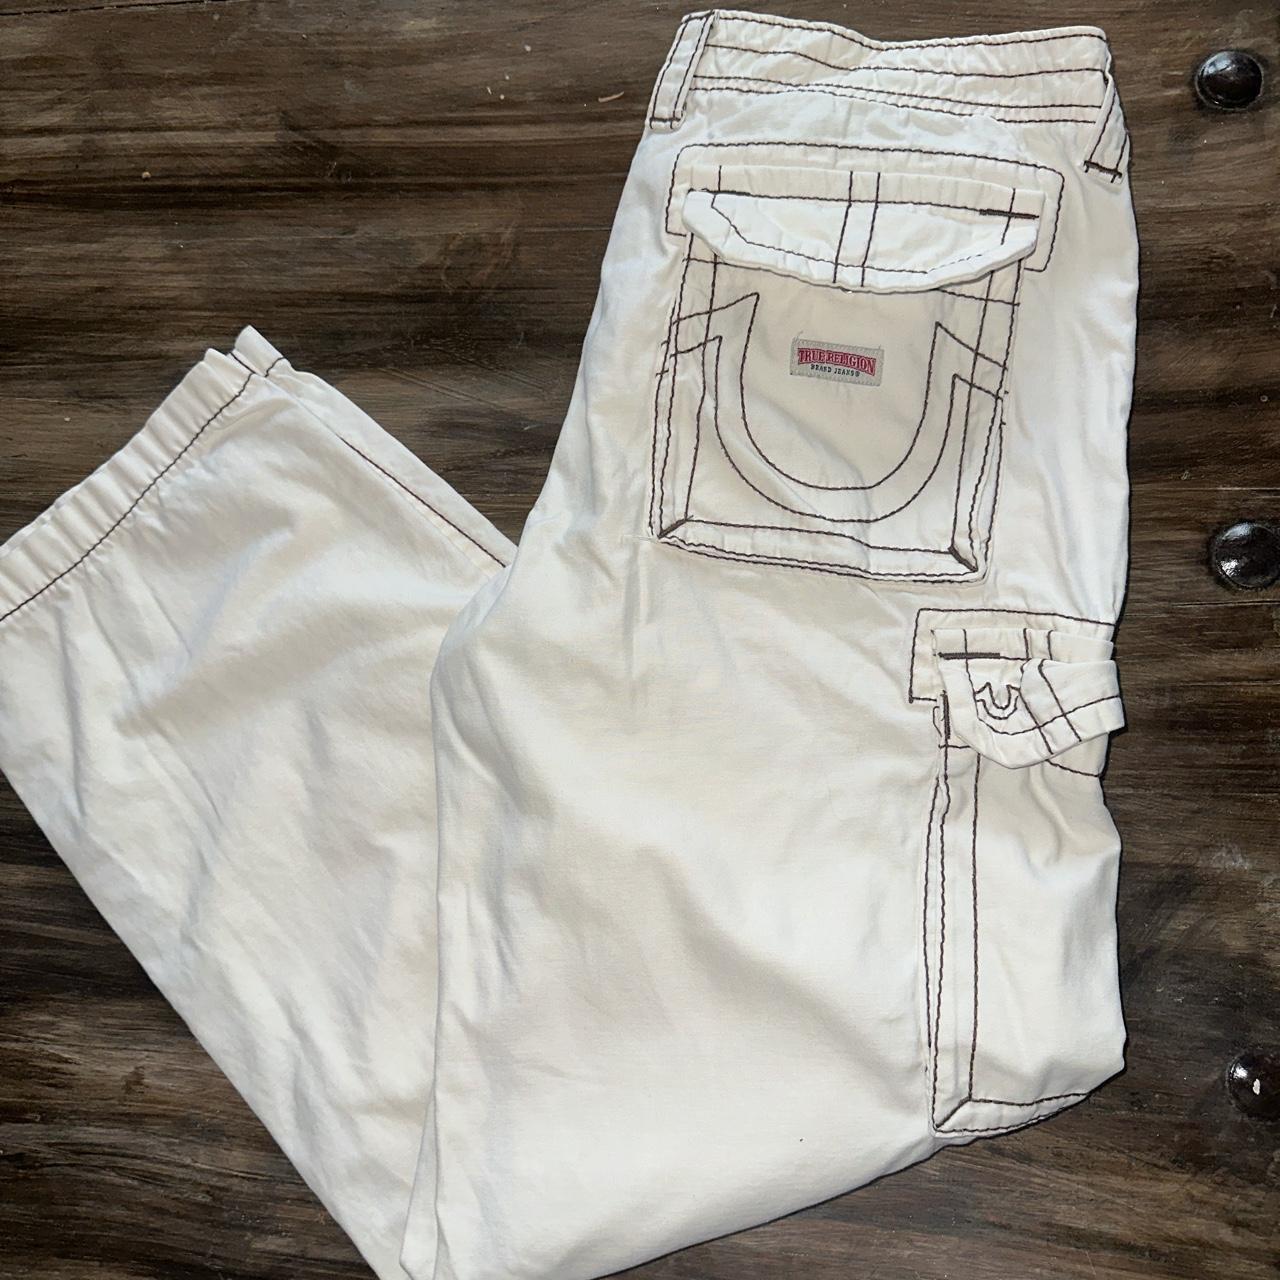 Crème cargo pants #cargos #truereligion #streetwear - Depop